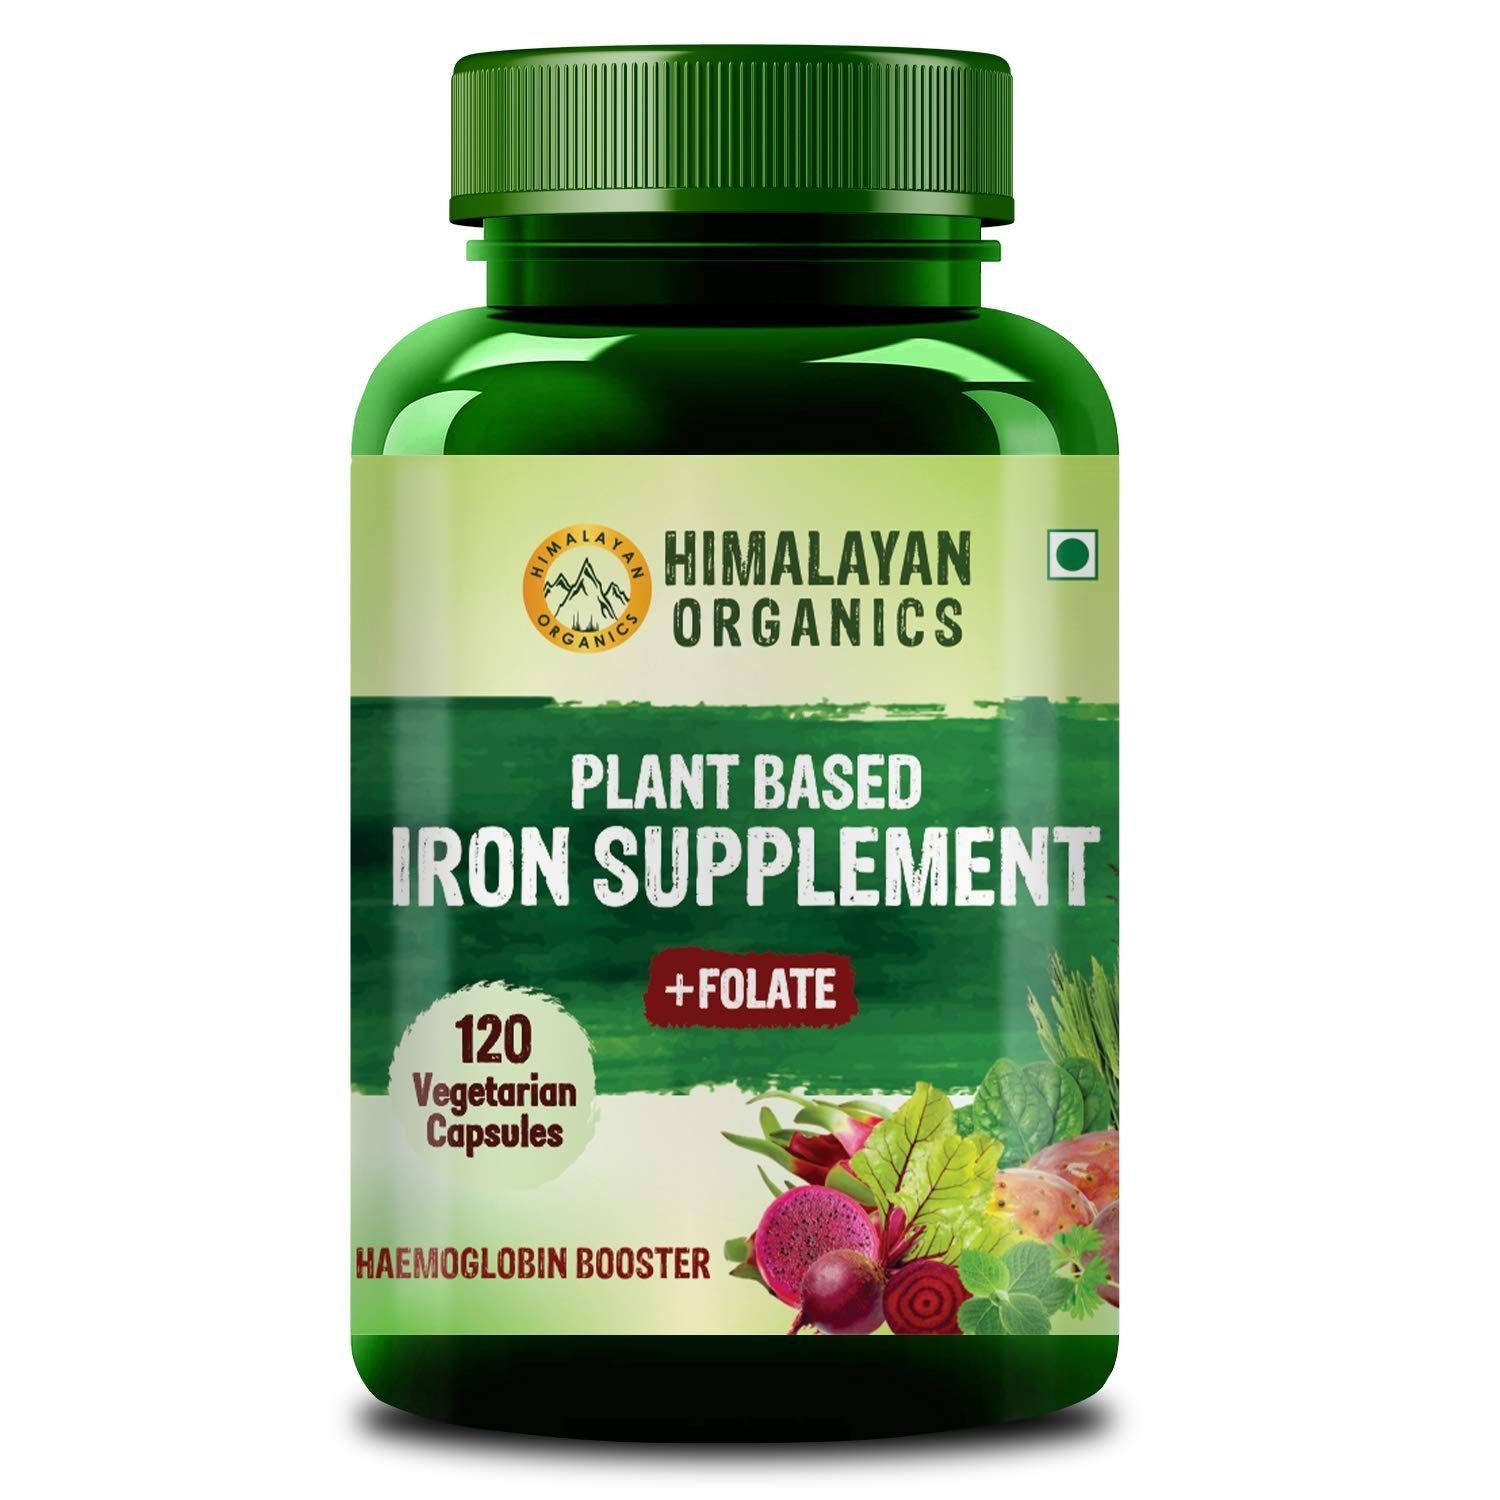 Himalayan Organics Plant Based Iron With Folate For Better Hemoglobin Image